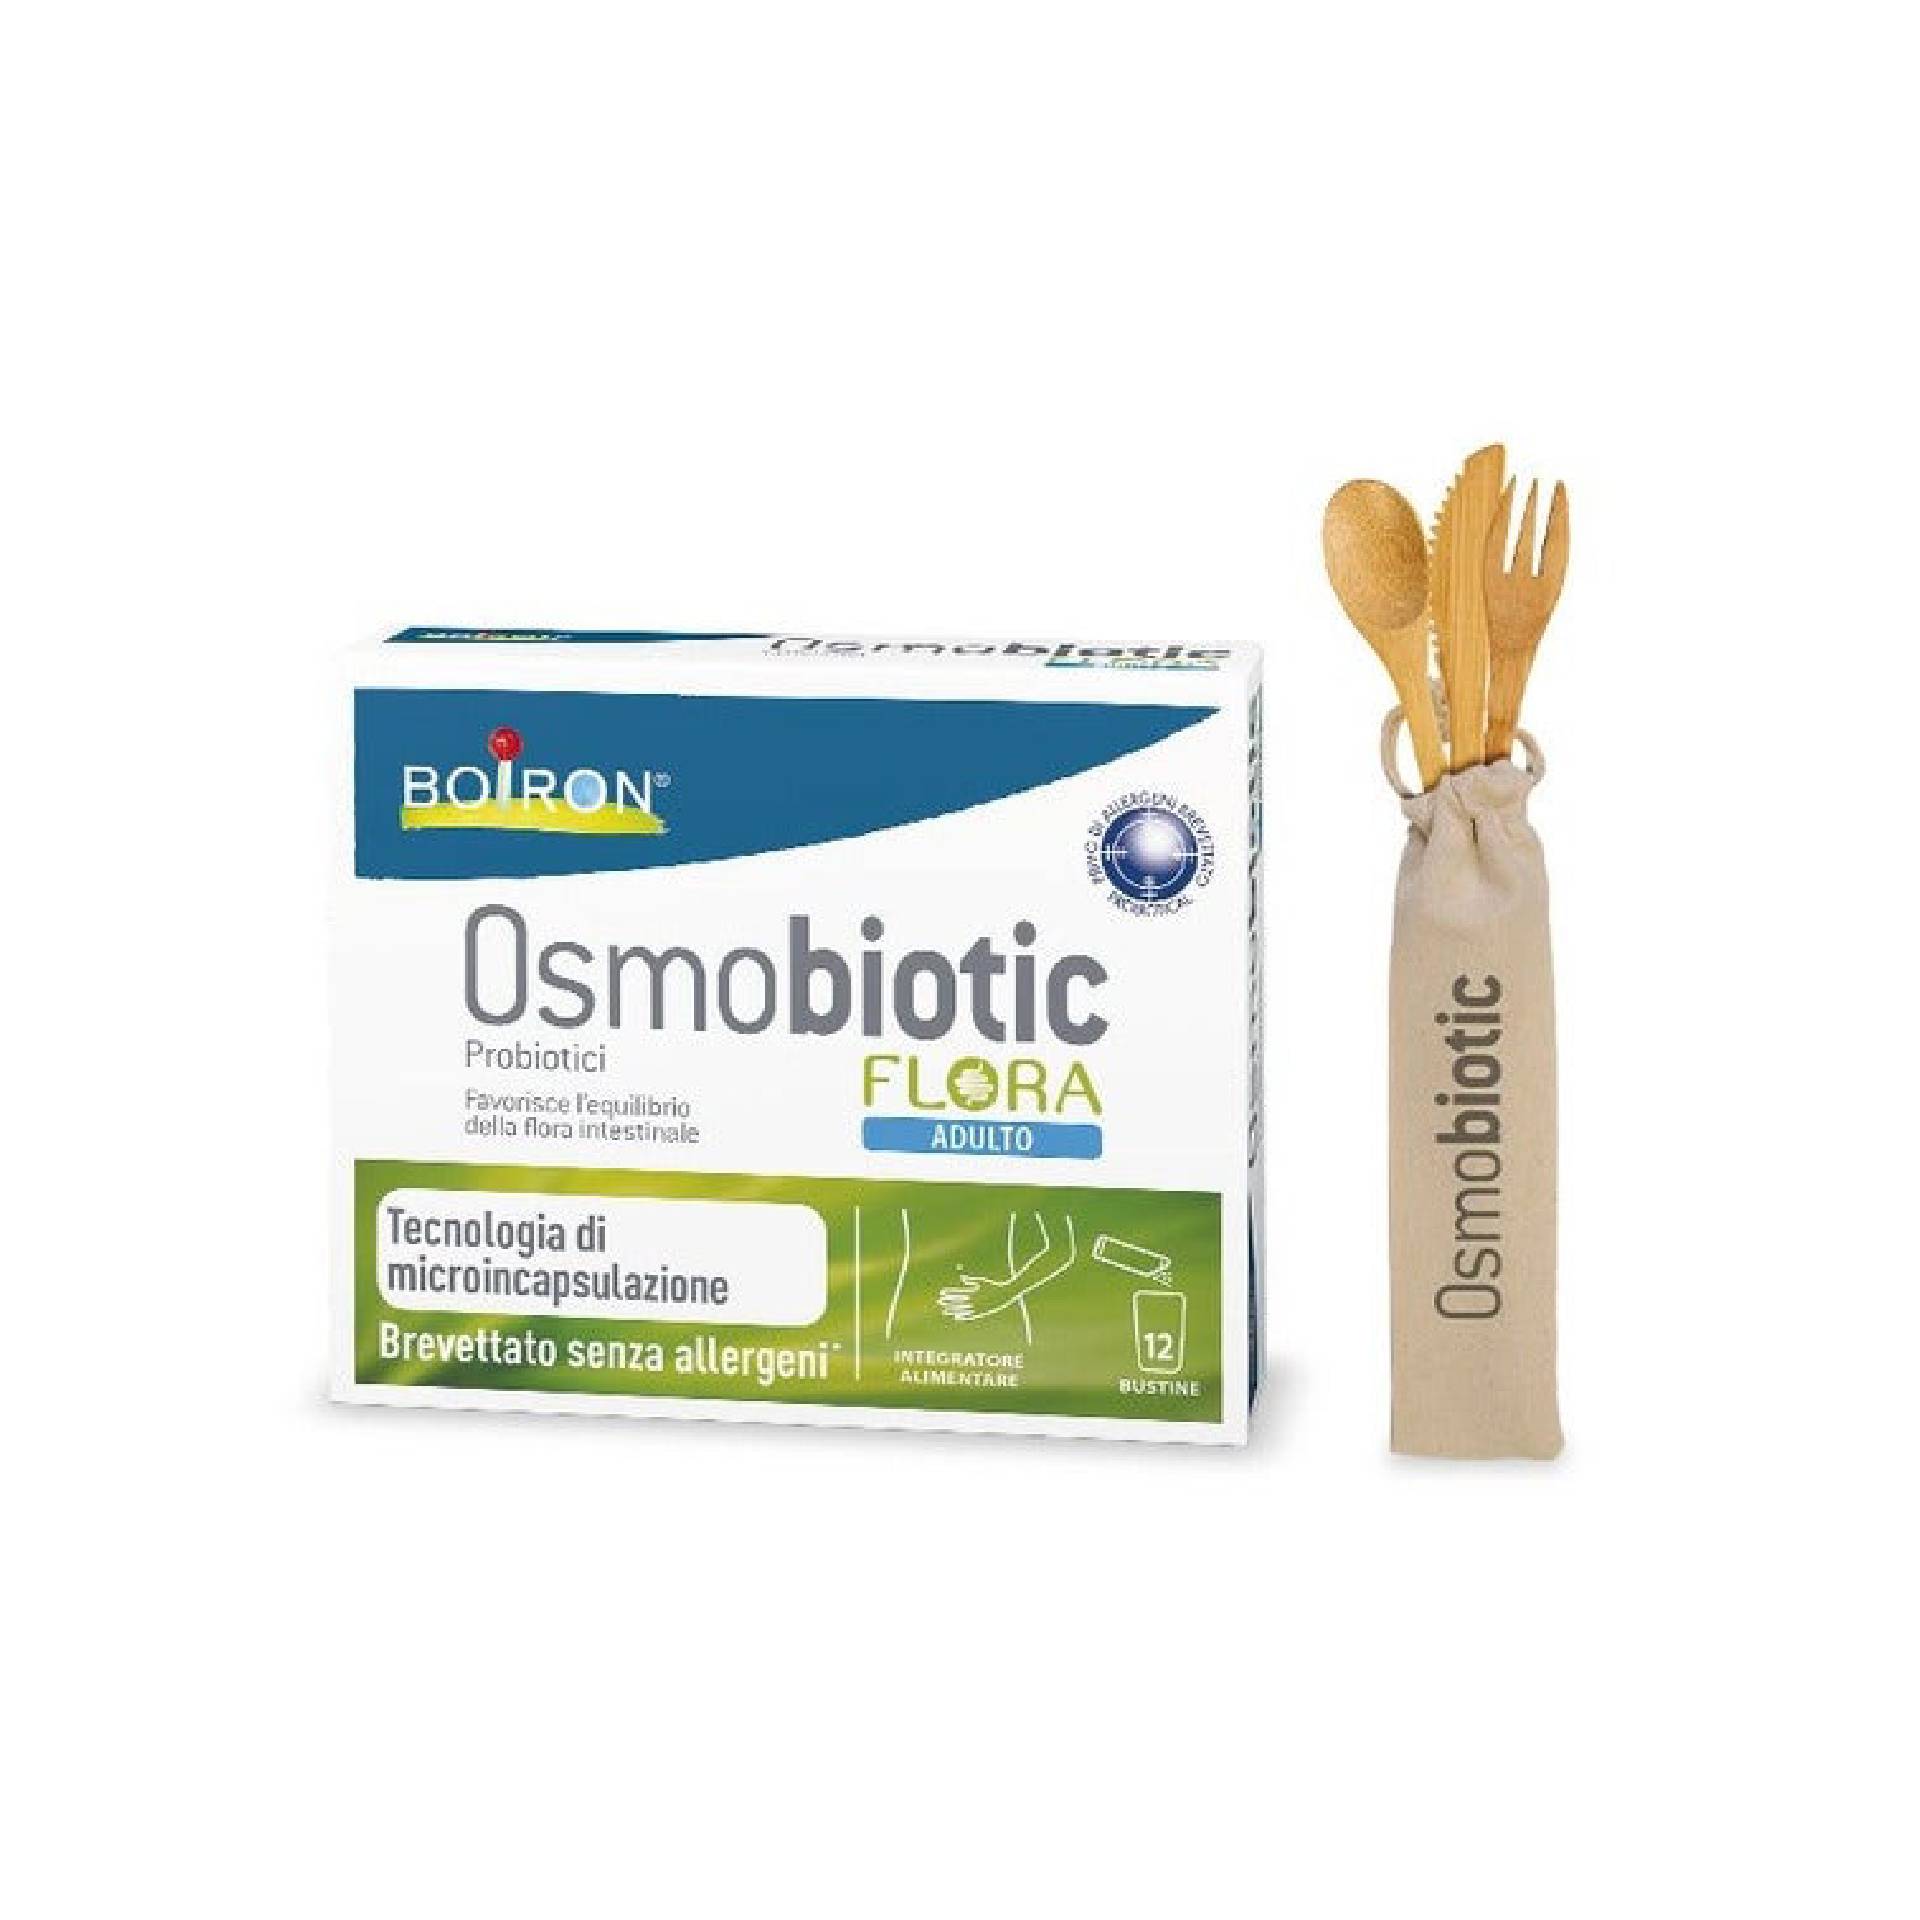 boiron osmobiotic flora adulto integratore probiotici 12 bustine + set posate omaggio